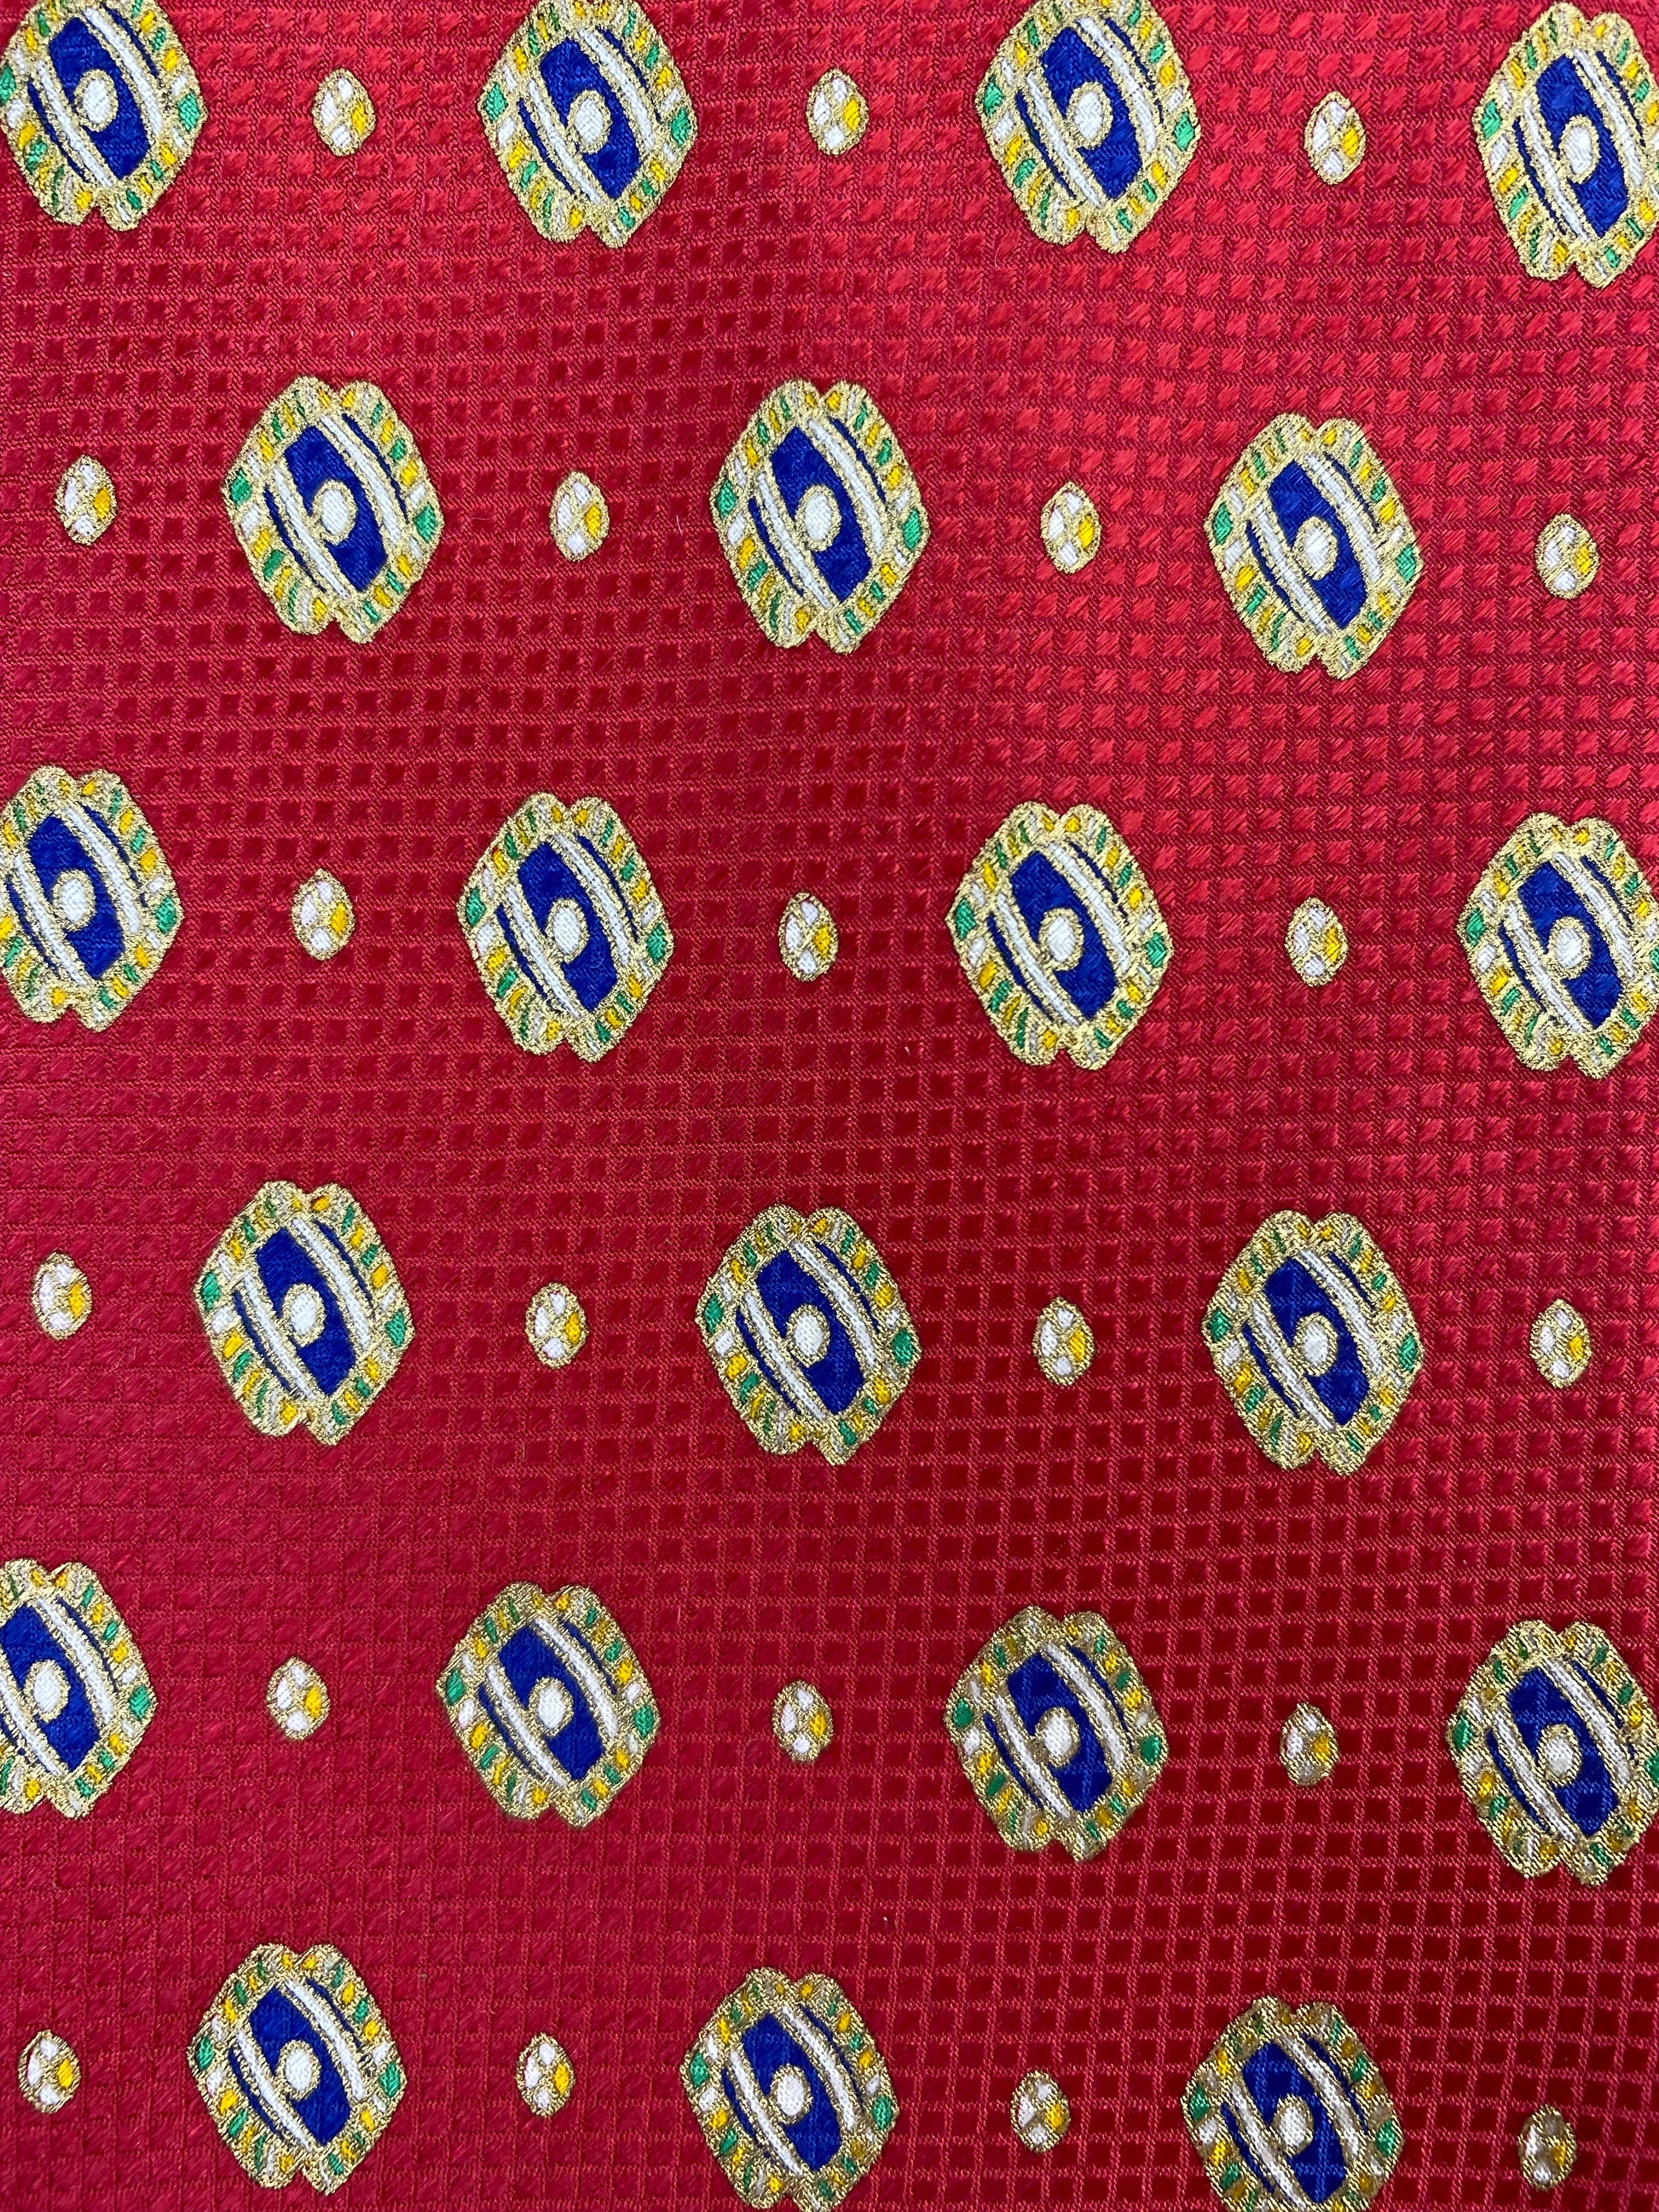 Close-up of: 90s Deadstock Silk Necktie, Men's Vintage Red/Blue Geometric Pattern Tie, NOS